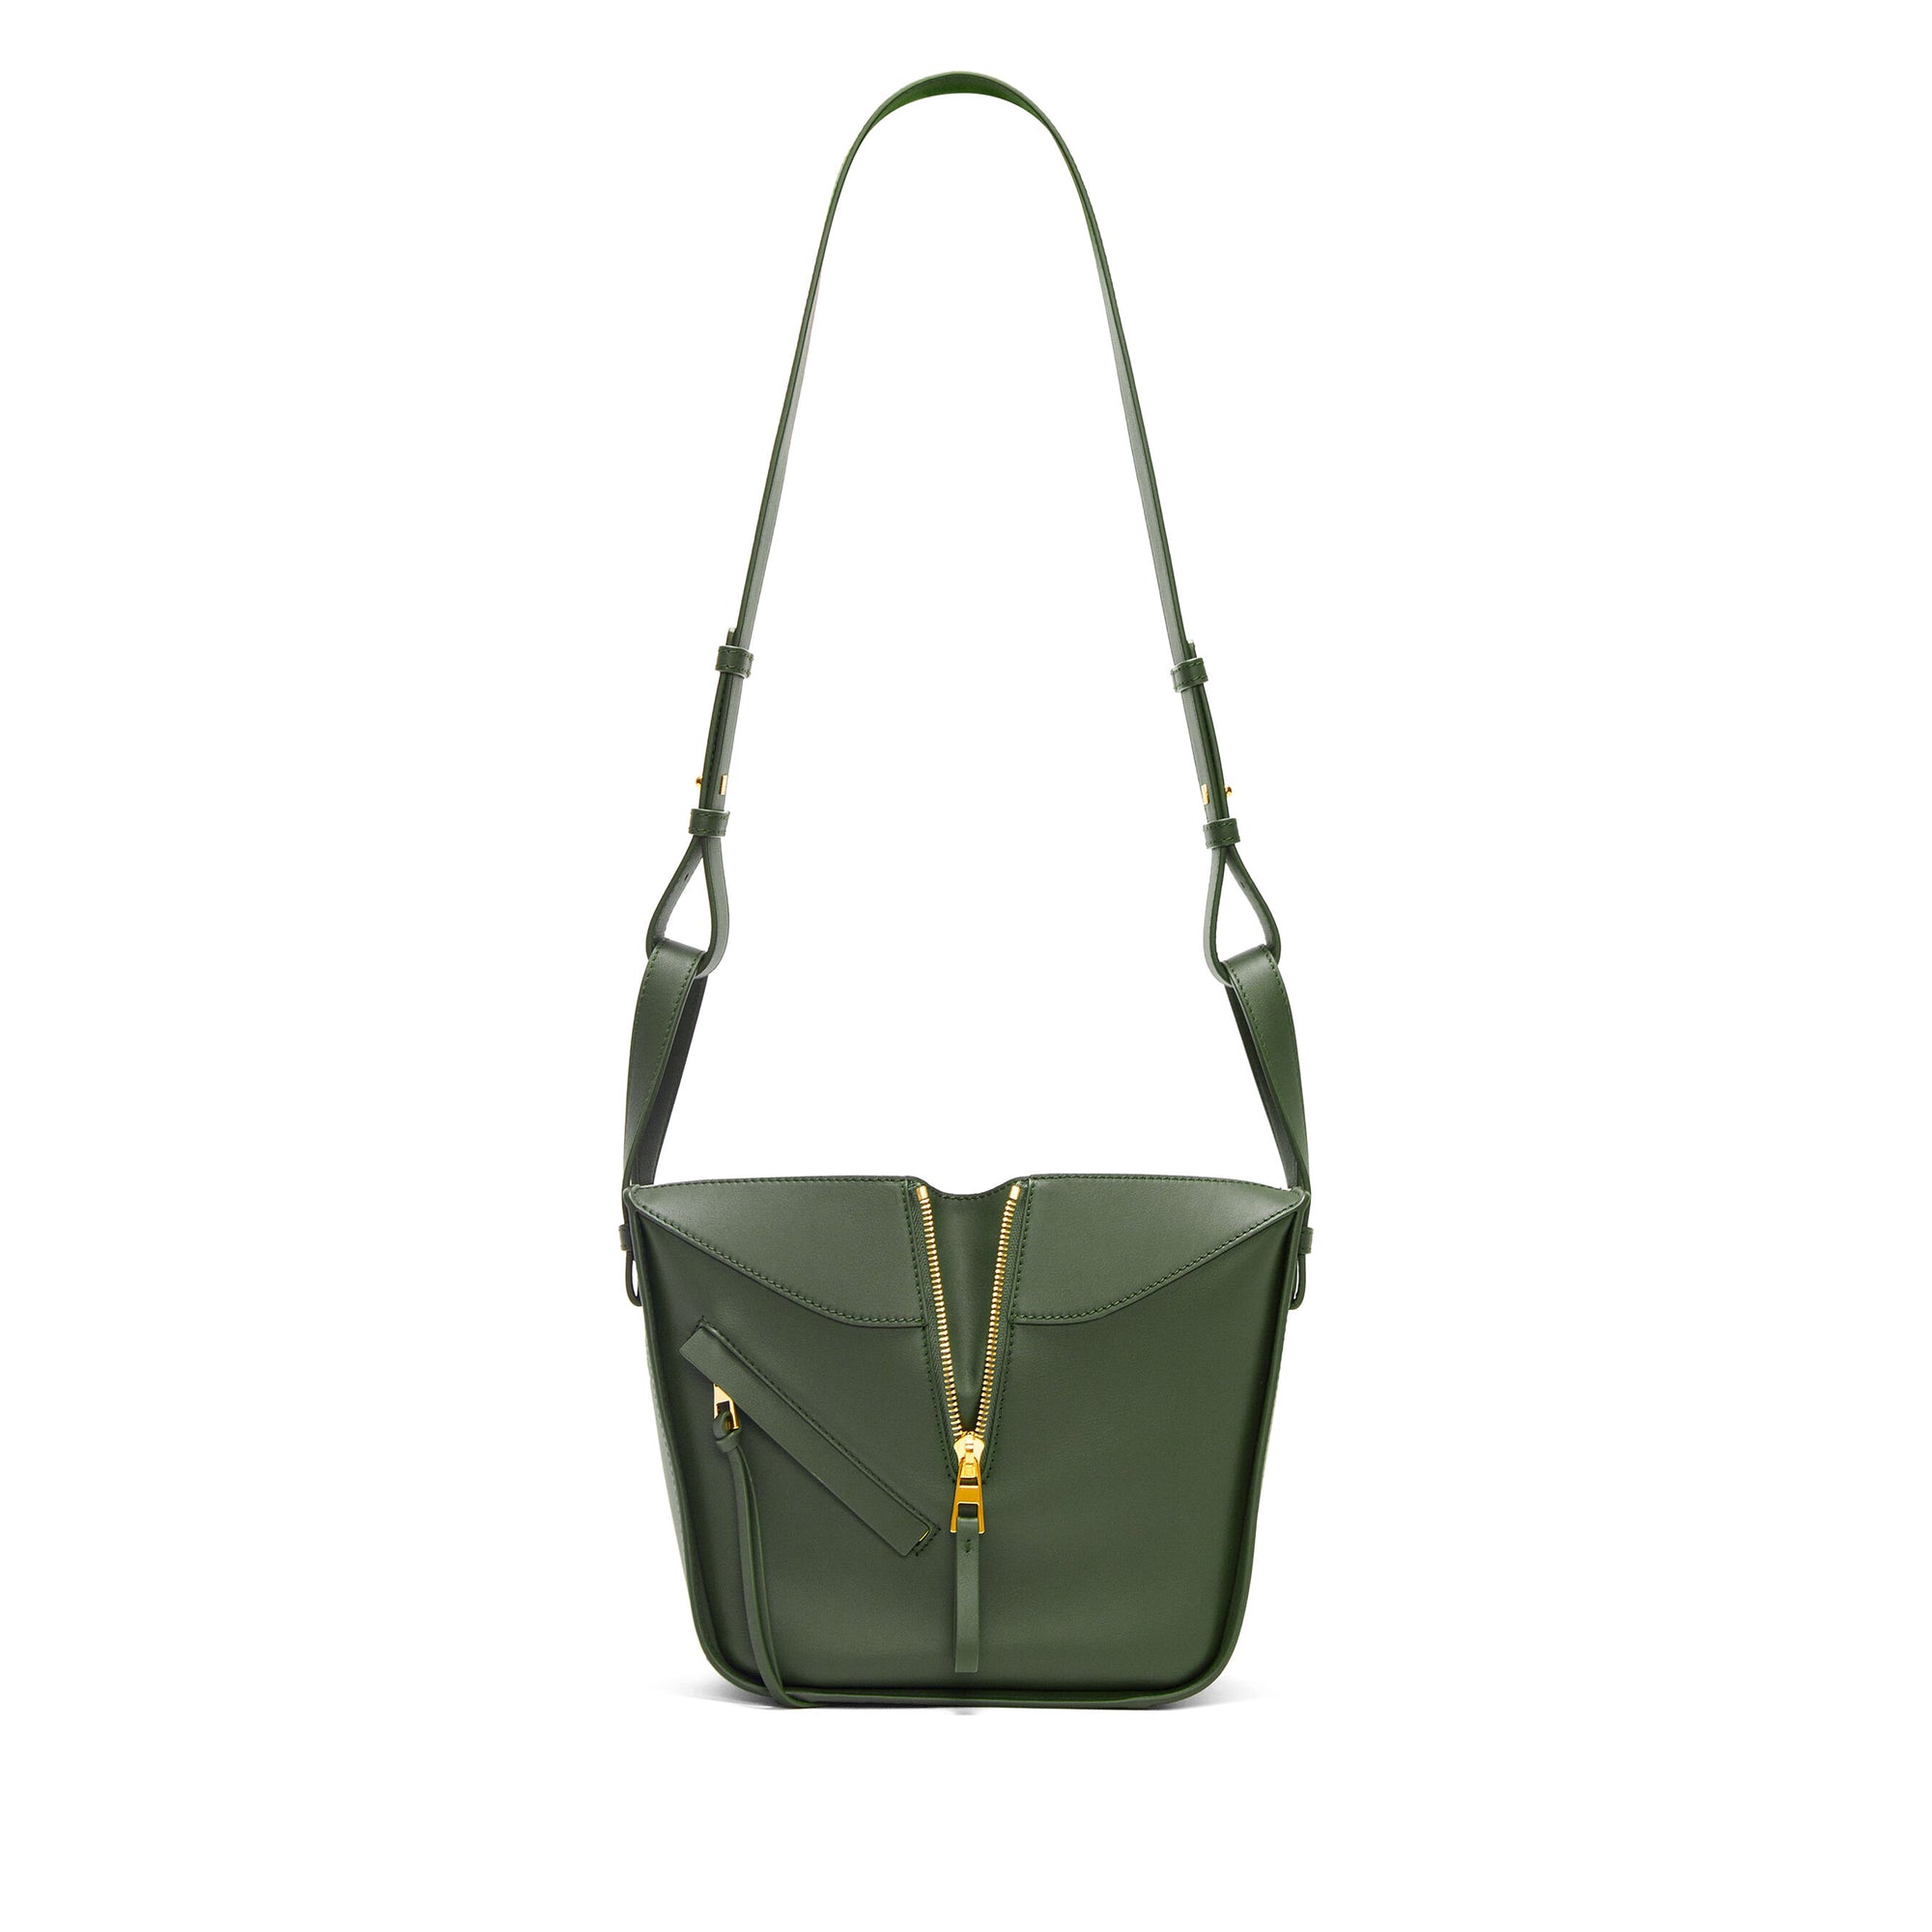 Loewe - Women's Hammock Compact Bag - (Bottle Green) view 4